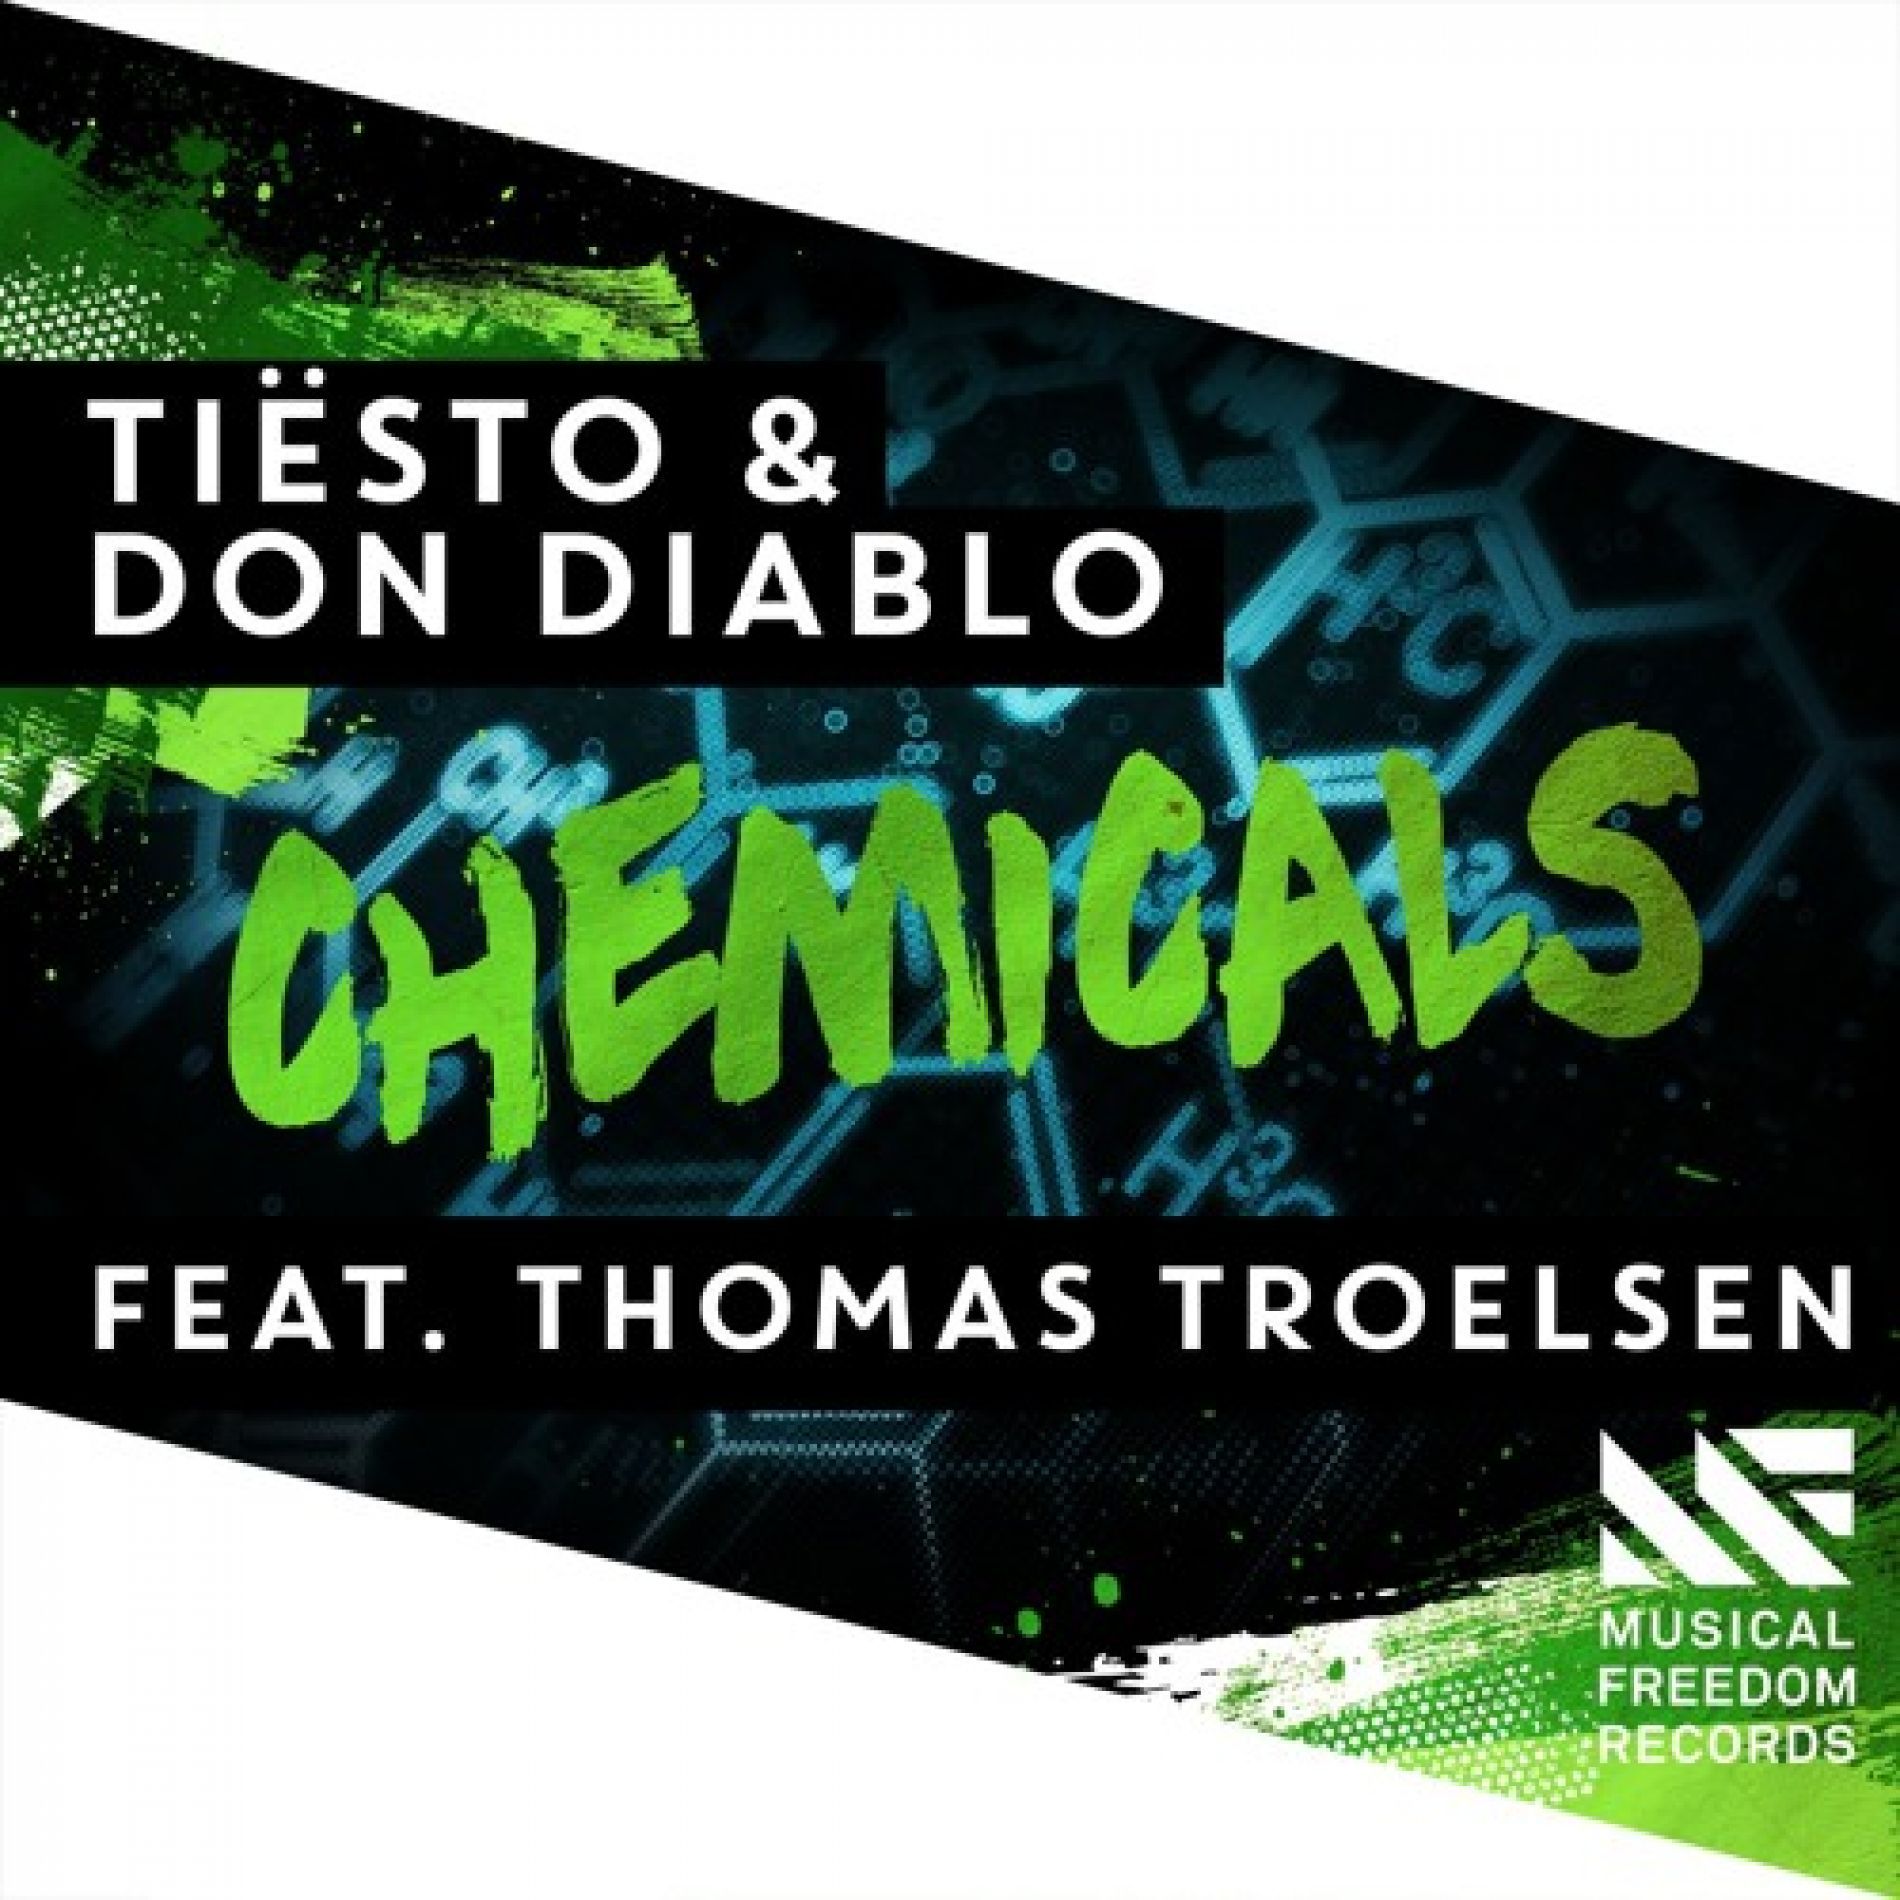 Tiesto & Don Diablo - Chemicals Feat. Thomas Troelsen